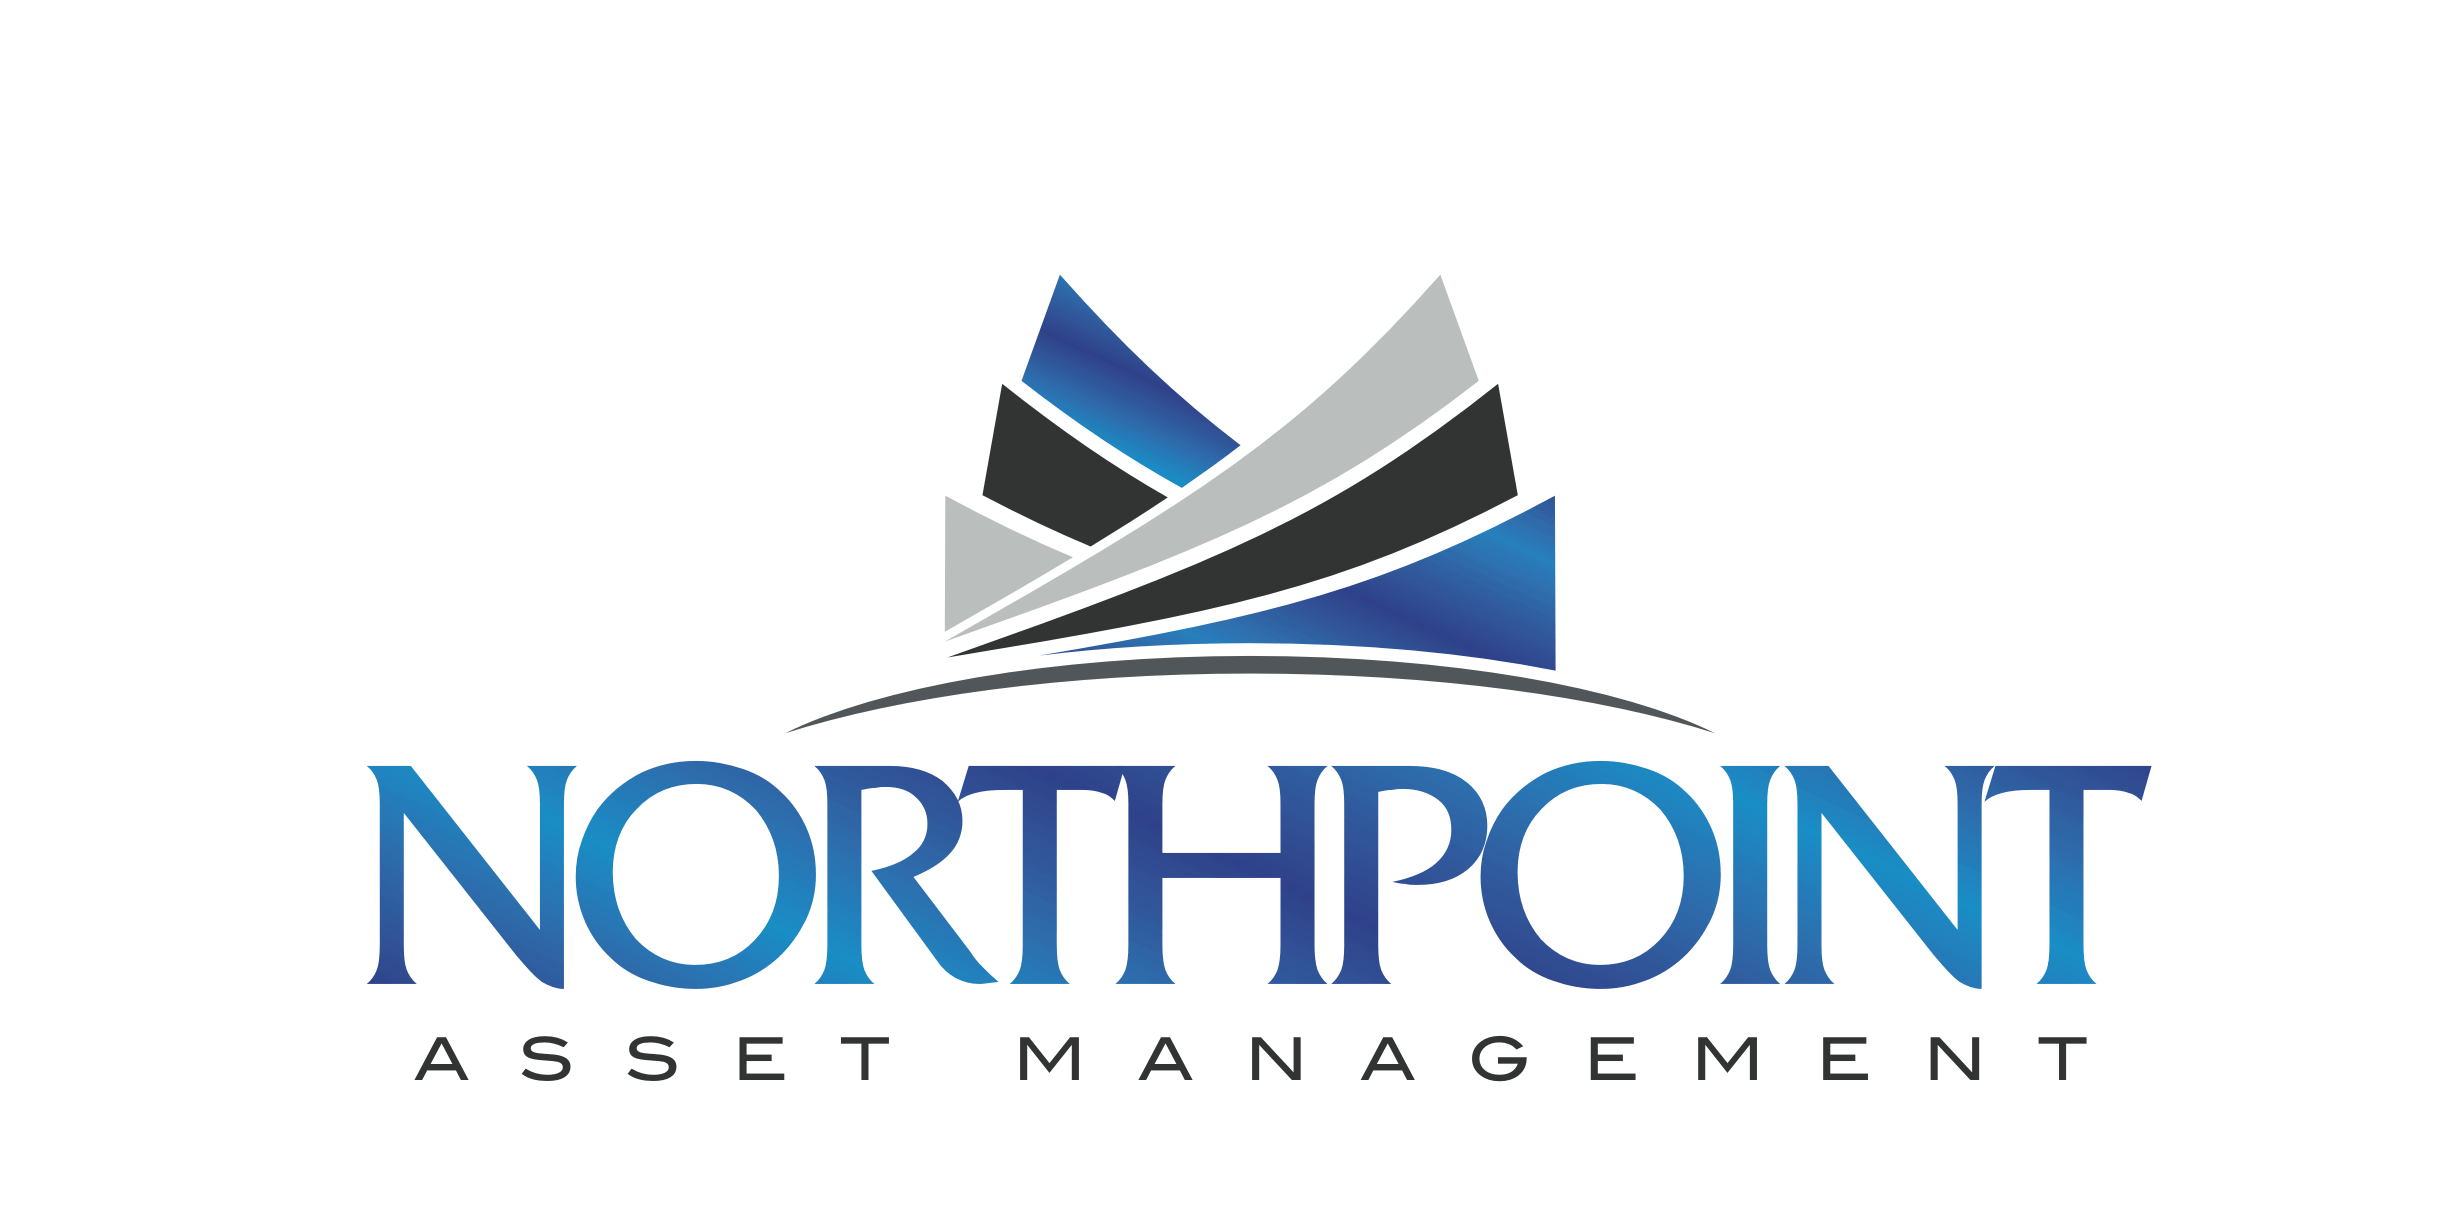 Northpoint Asset Management - Greenville, South Carolina logo